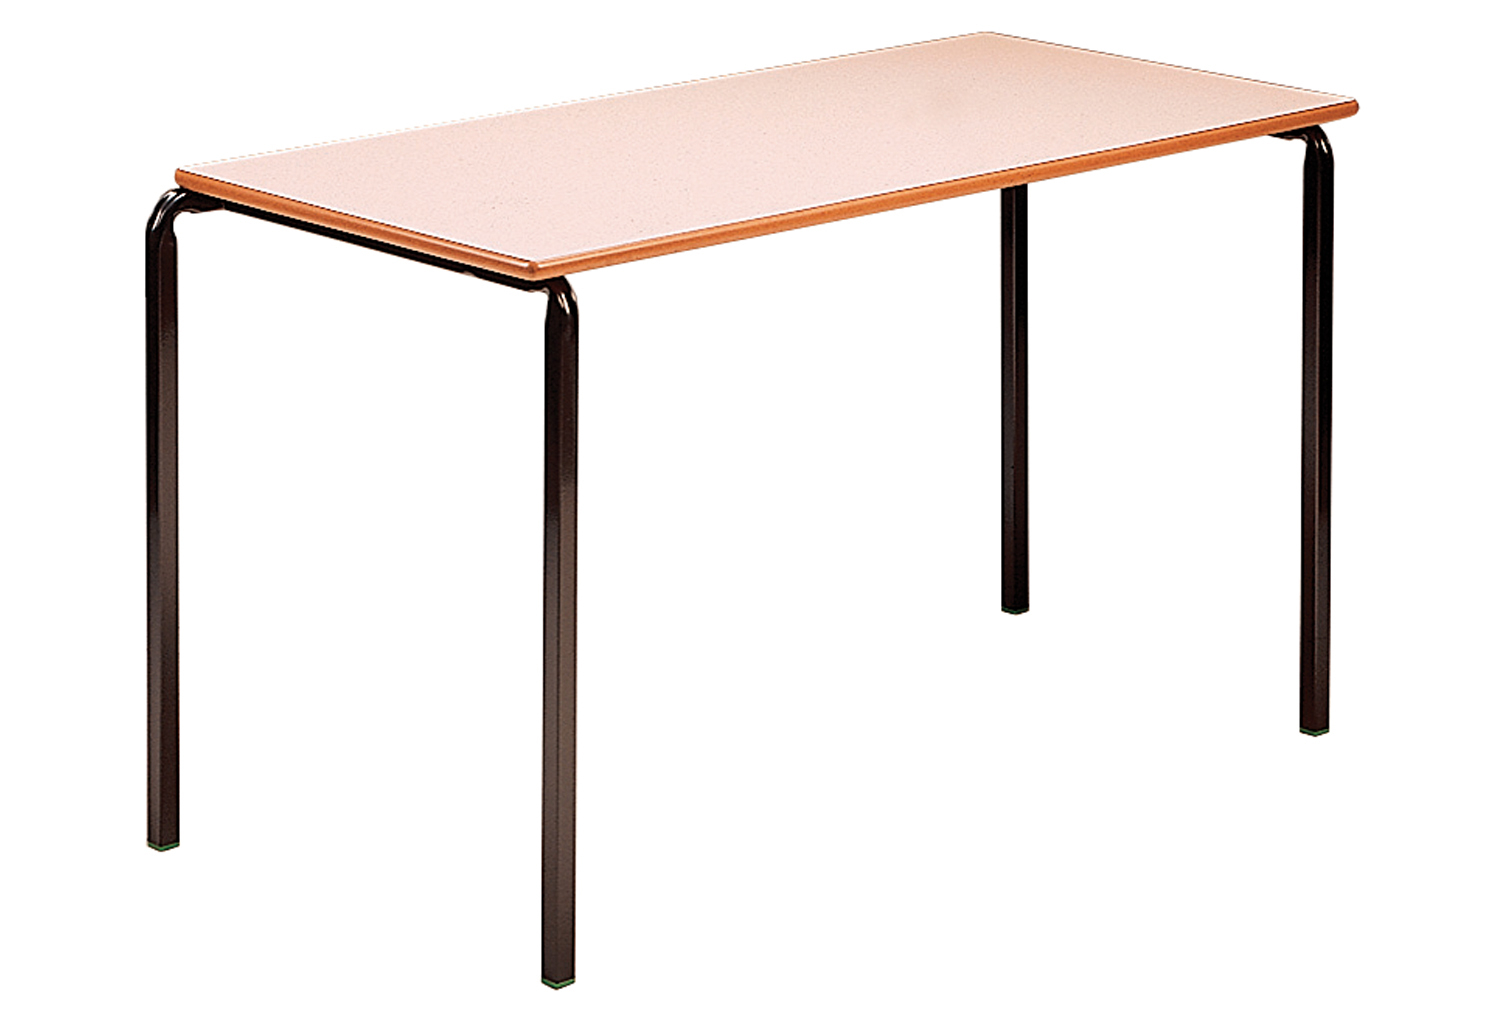 Qty 4 - Rectangular Crush Bent Classroom Tables 14+ Years, 120wx60dx76h (cm), Charcoal Frame, Beech Top, MDF Beech Edge